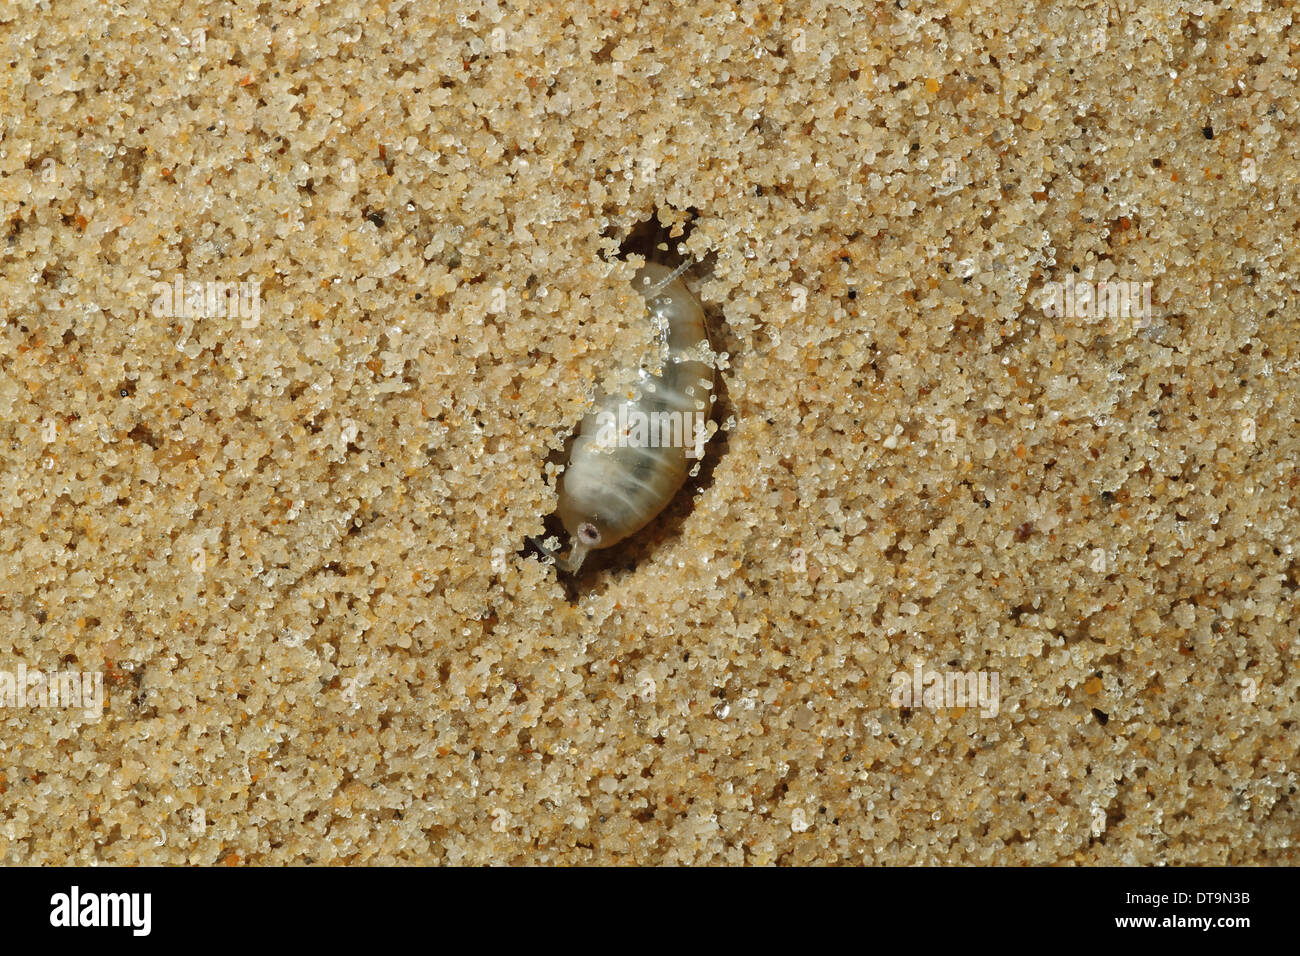 Common Sandhopper (Talitrus saltator) adult, burrowing in sand (captive) Stock Photo